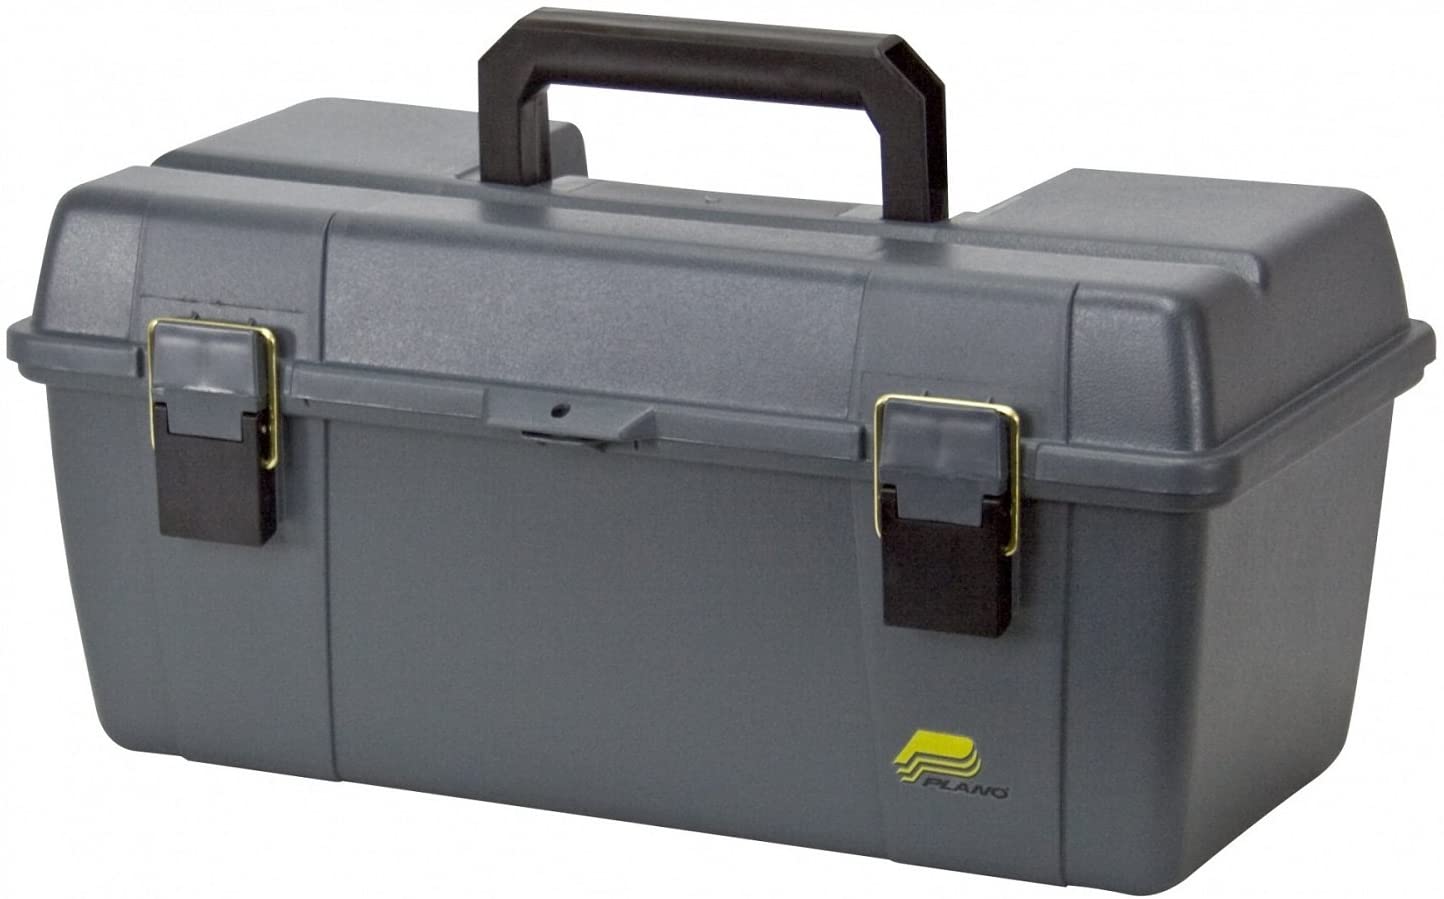 Plano 651-010 Stow & Go Portable Storage Organizer Box